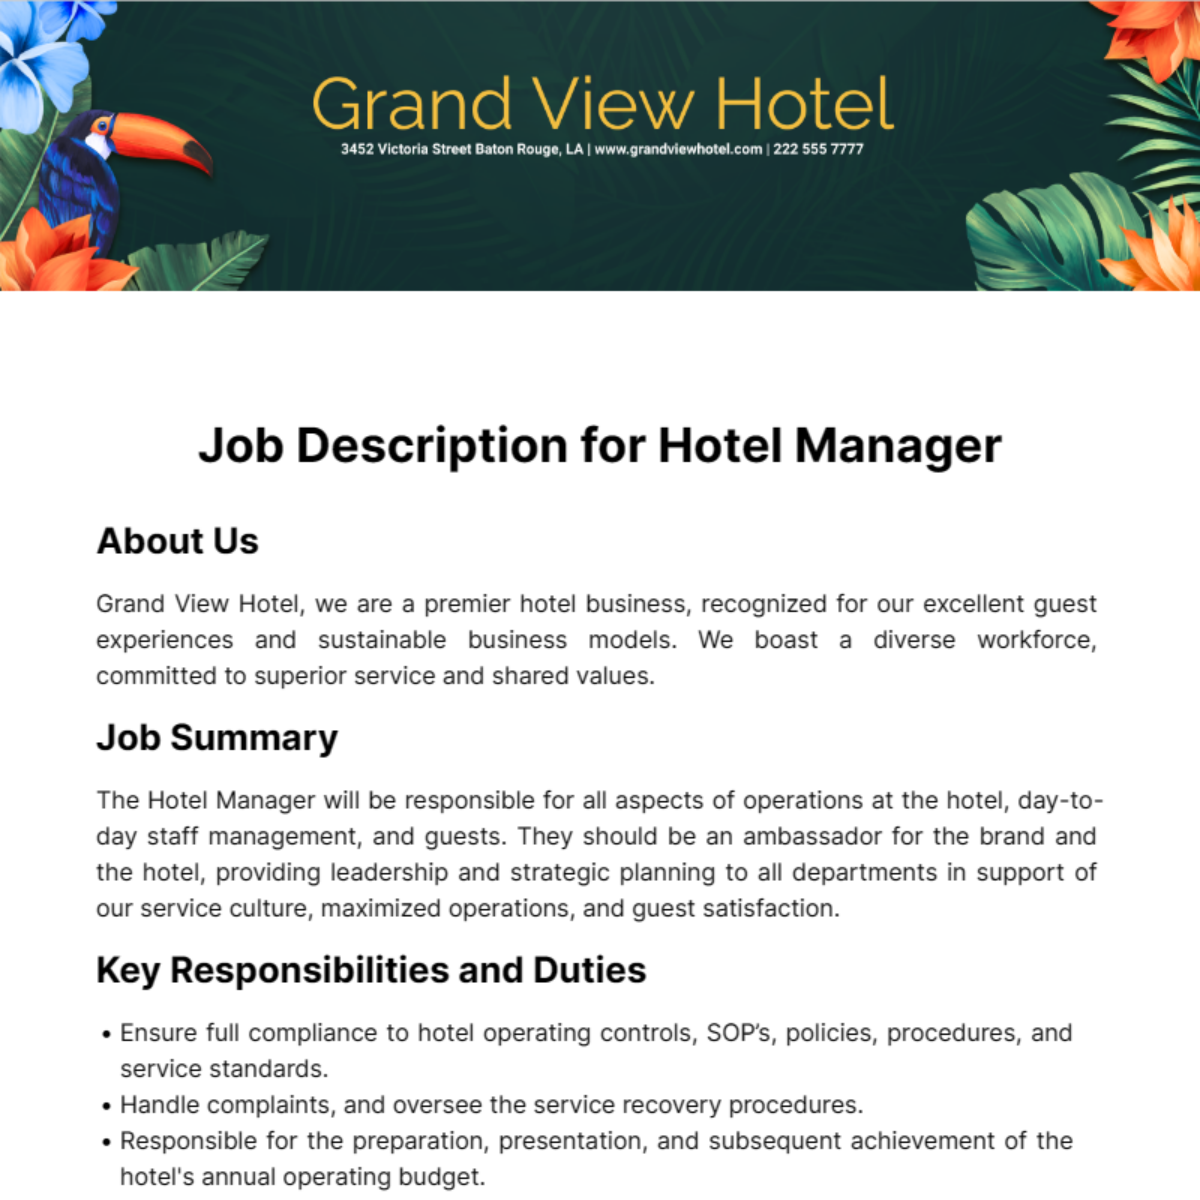 Job Description for Hotel Manager Template